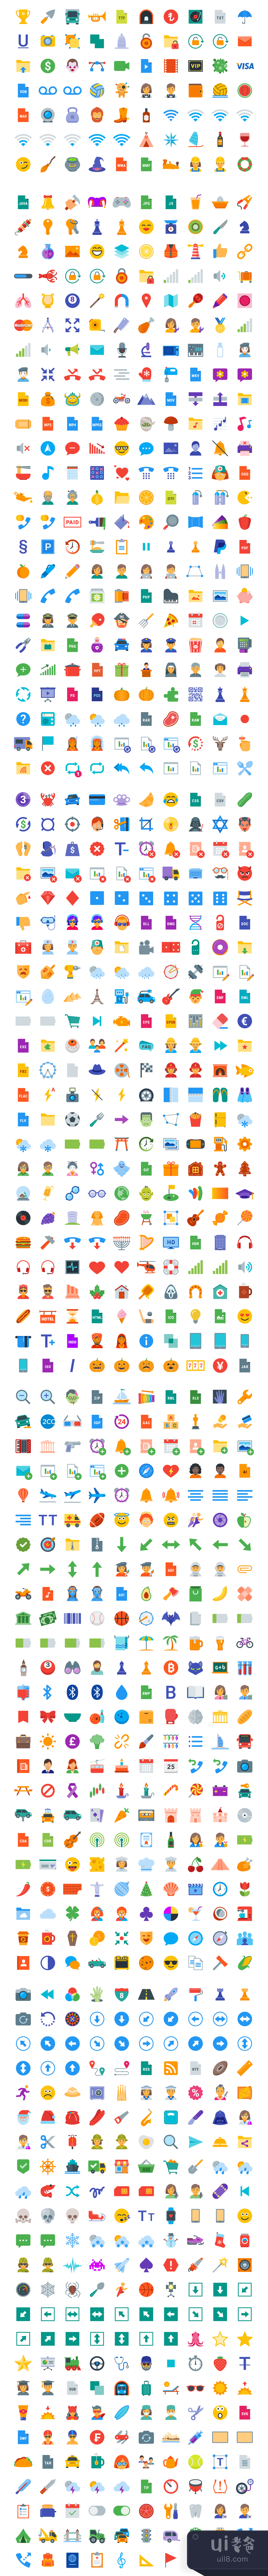 1000个平面彩色图标 (1000 Flat Color Icons)插图1